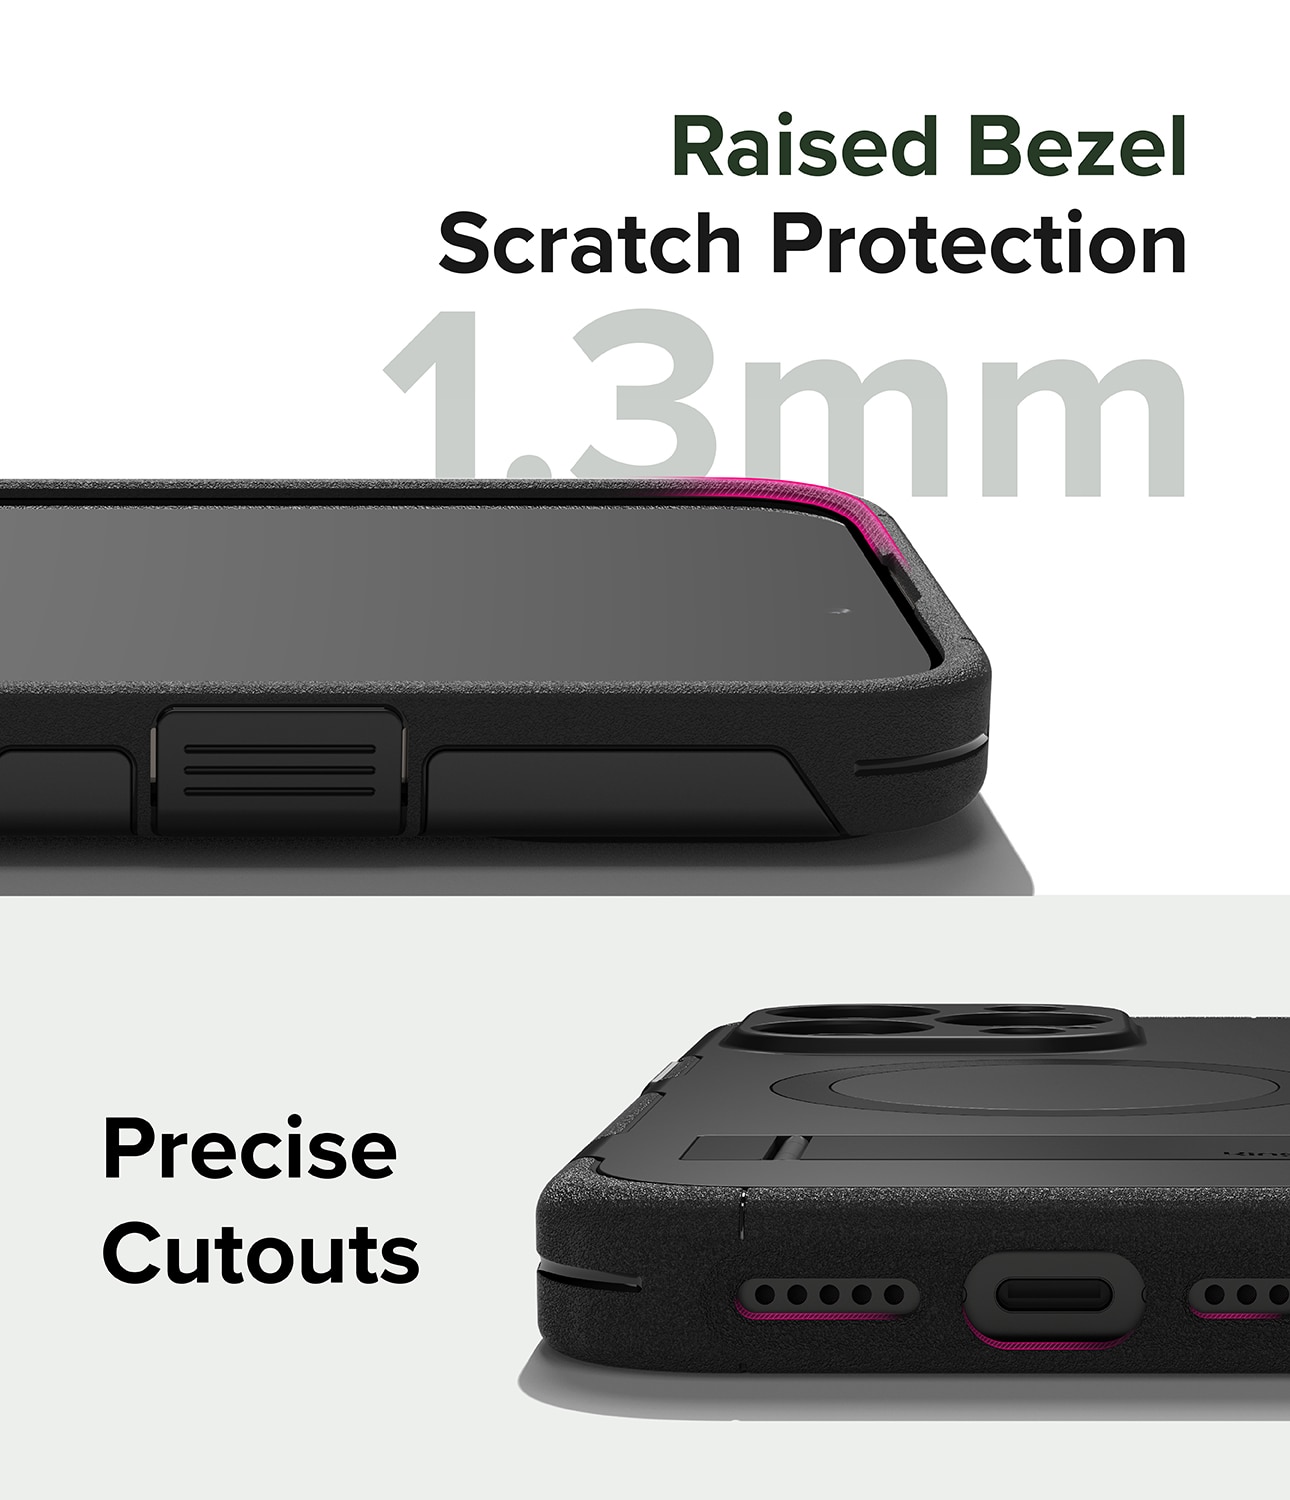 Alles Magnetic Case iPhone 15 Pro Max zwart